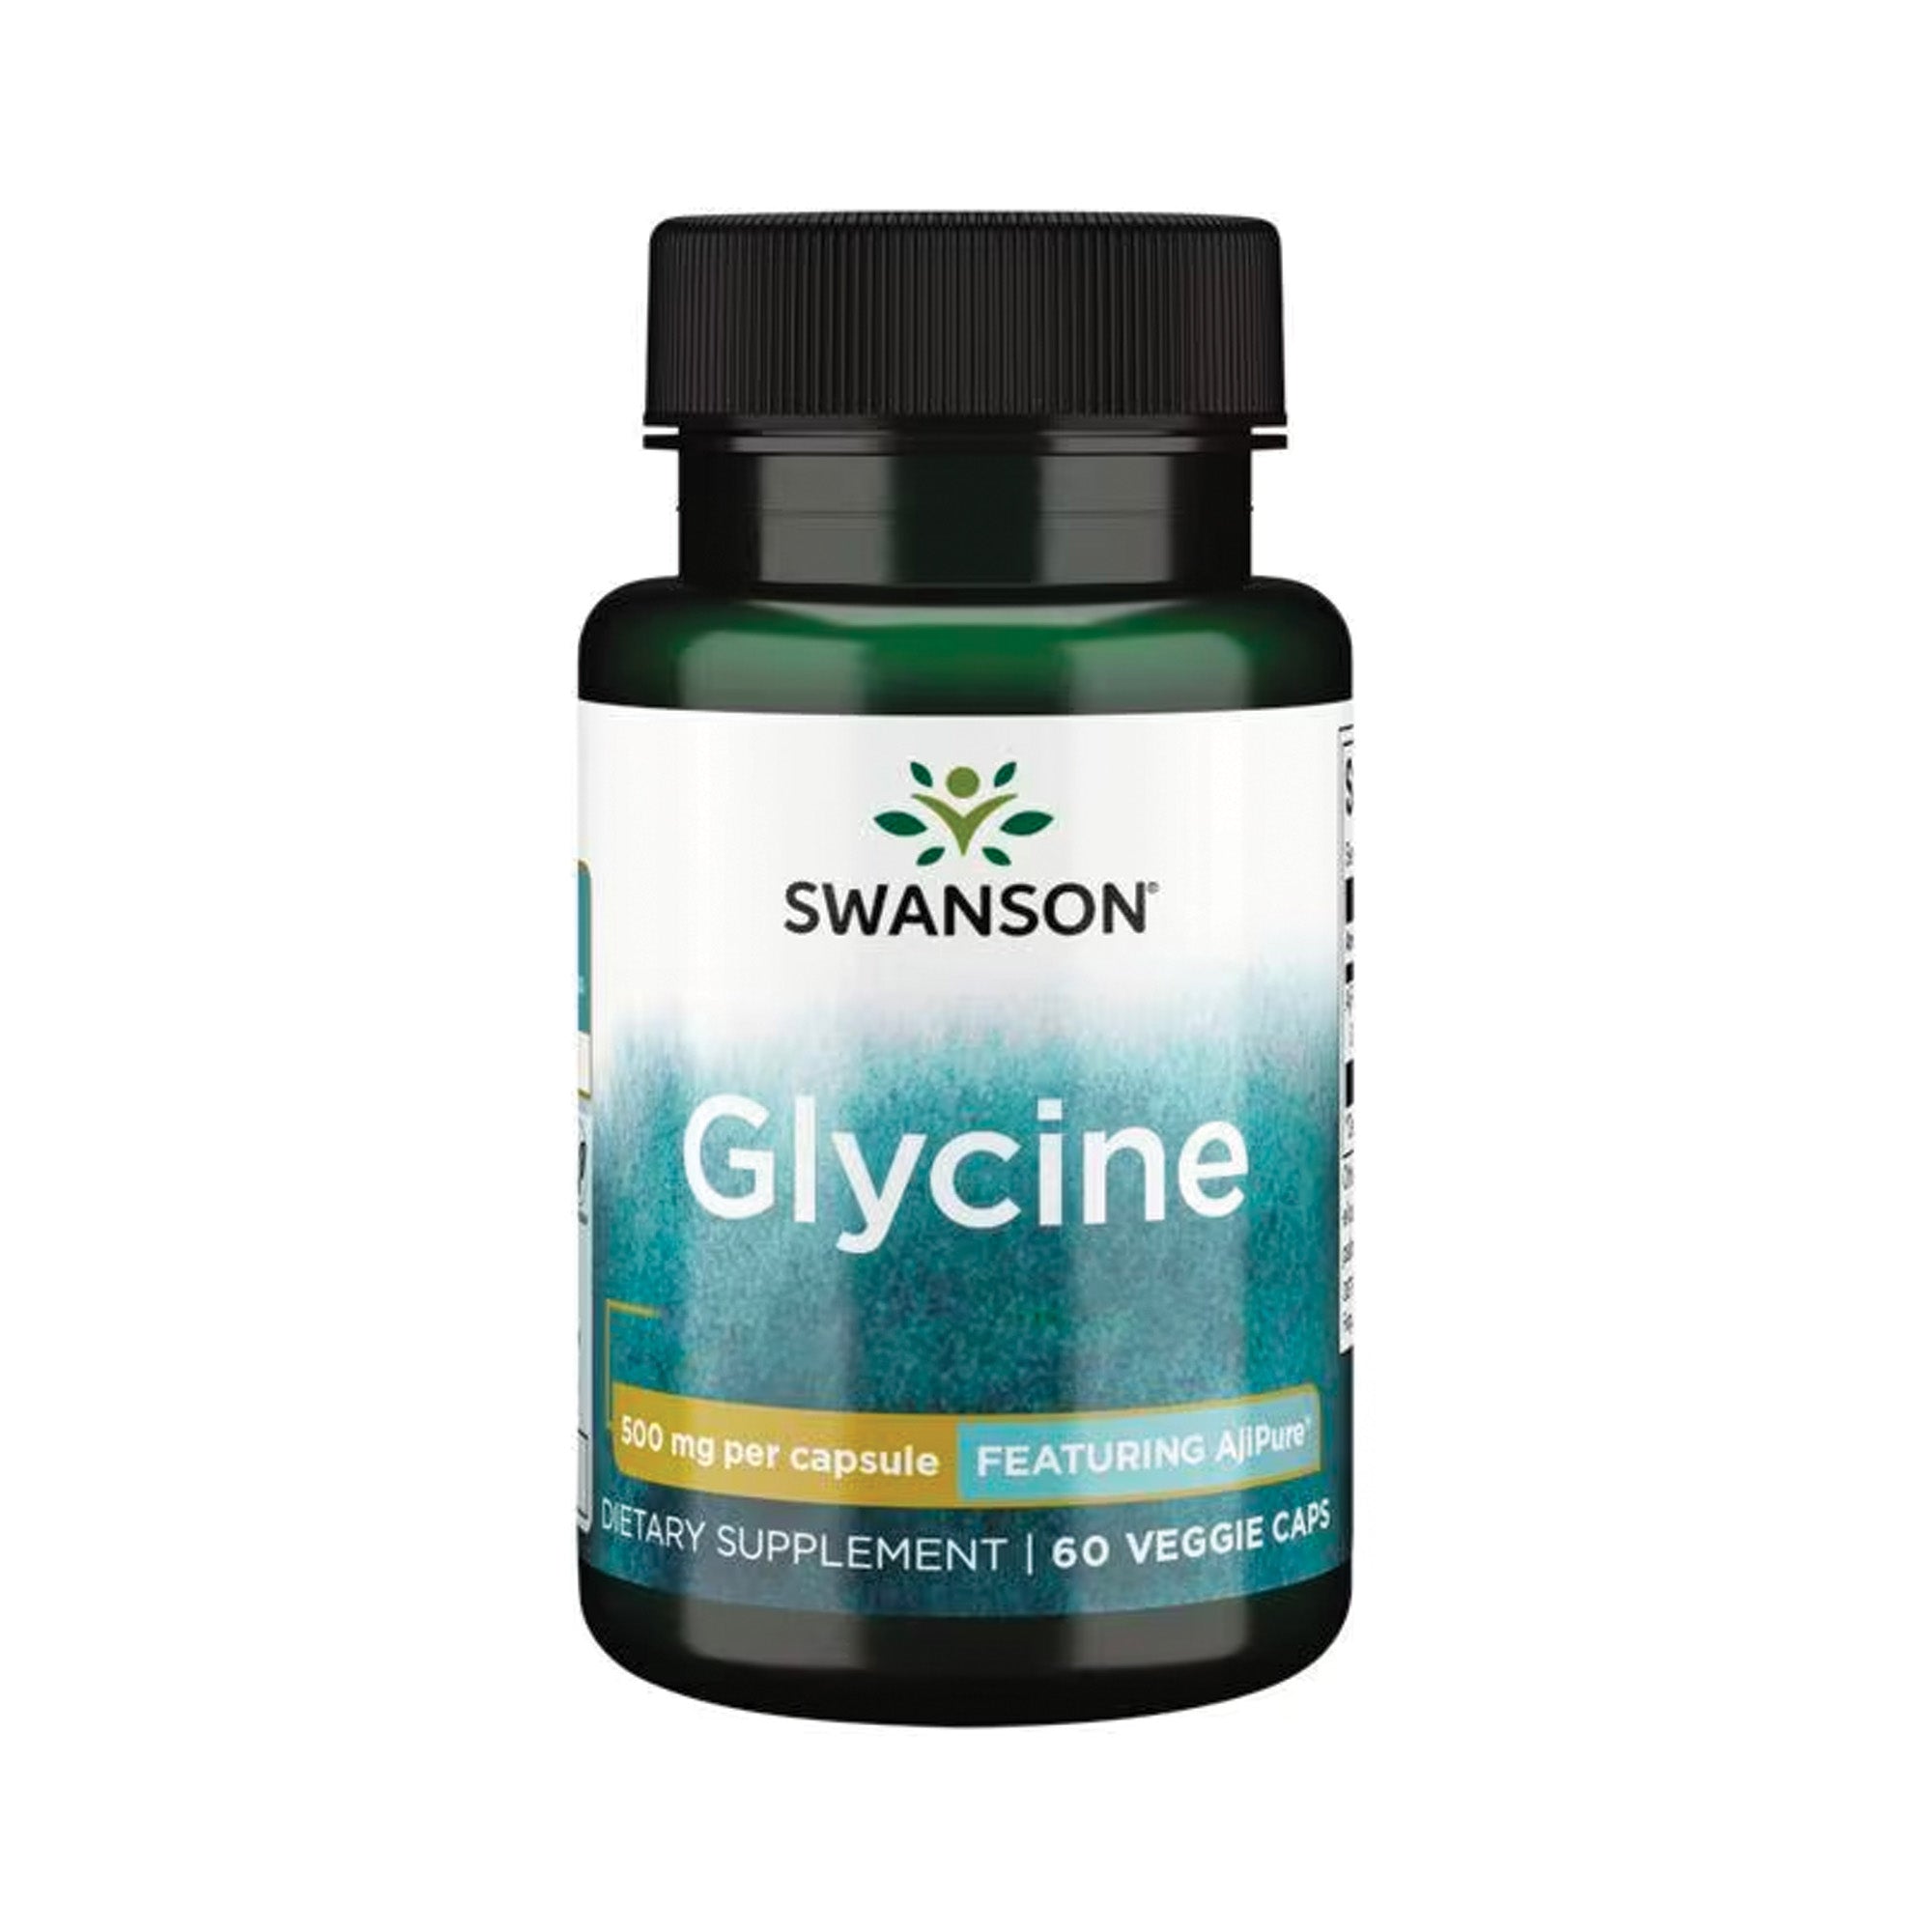 Swanson | Glycine Capsules | AjiPure® Glycine | 60 vegan capsules | 500mg